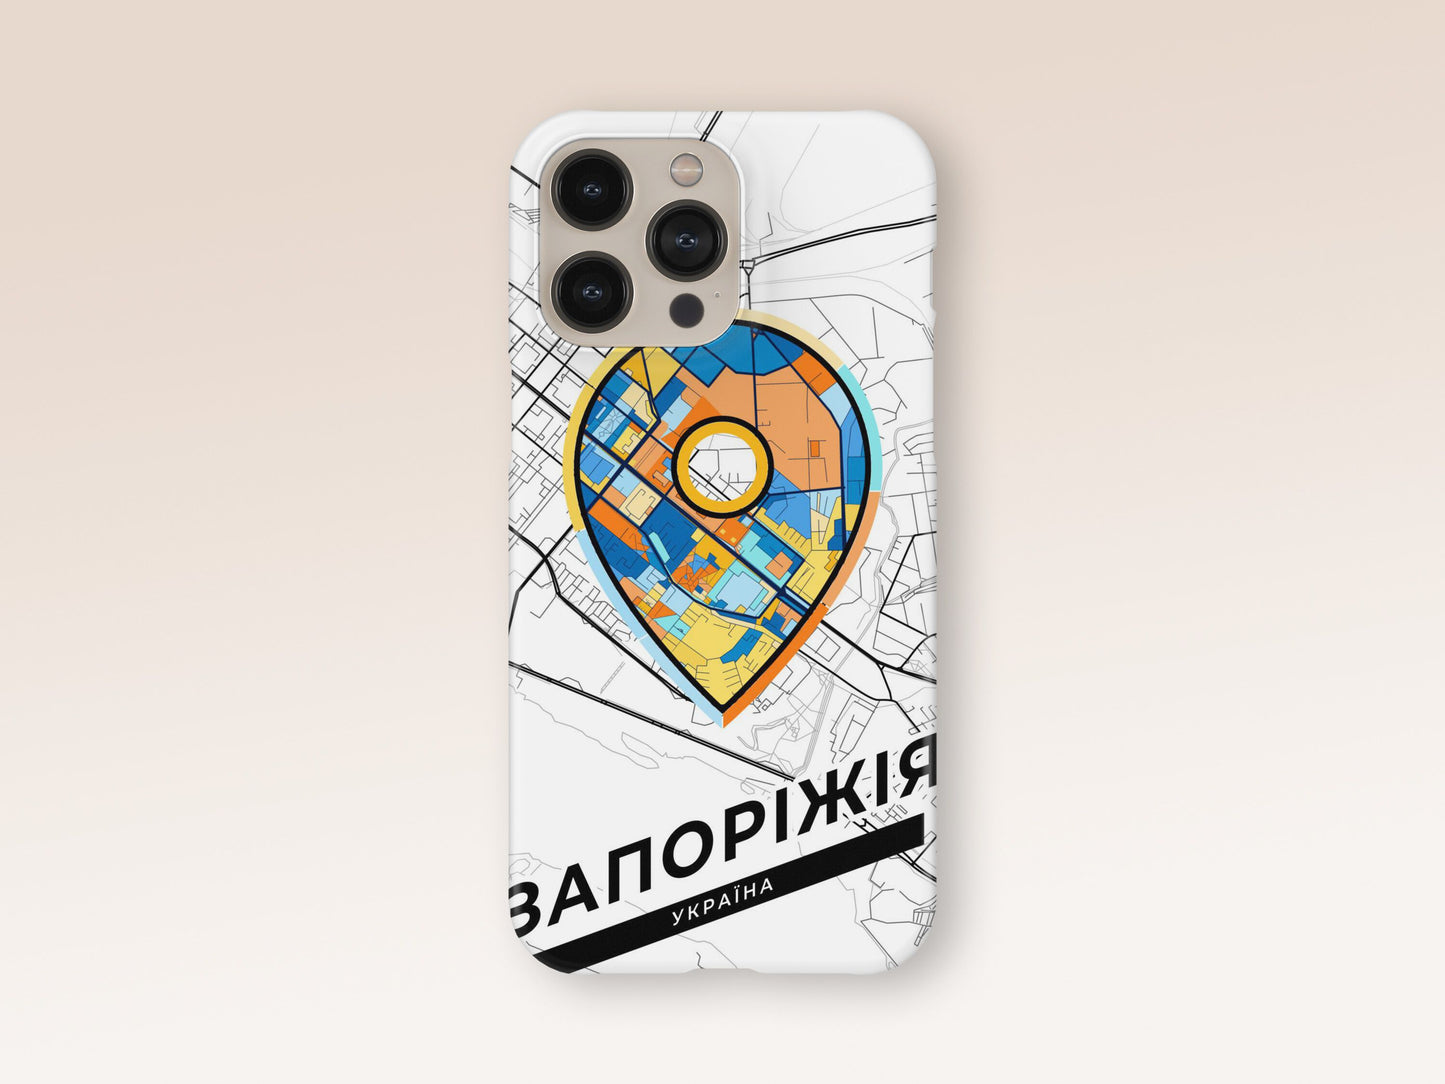 Zaporizhia Ukraine slim phone case with colorful icon 1